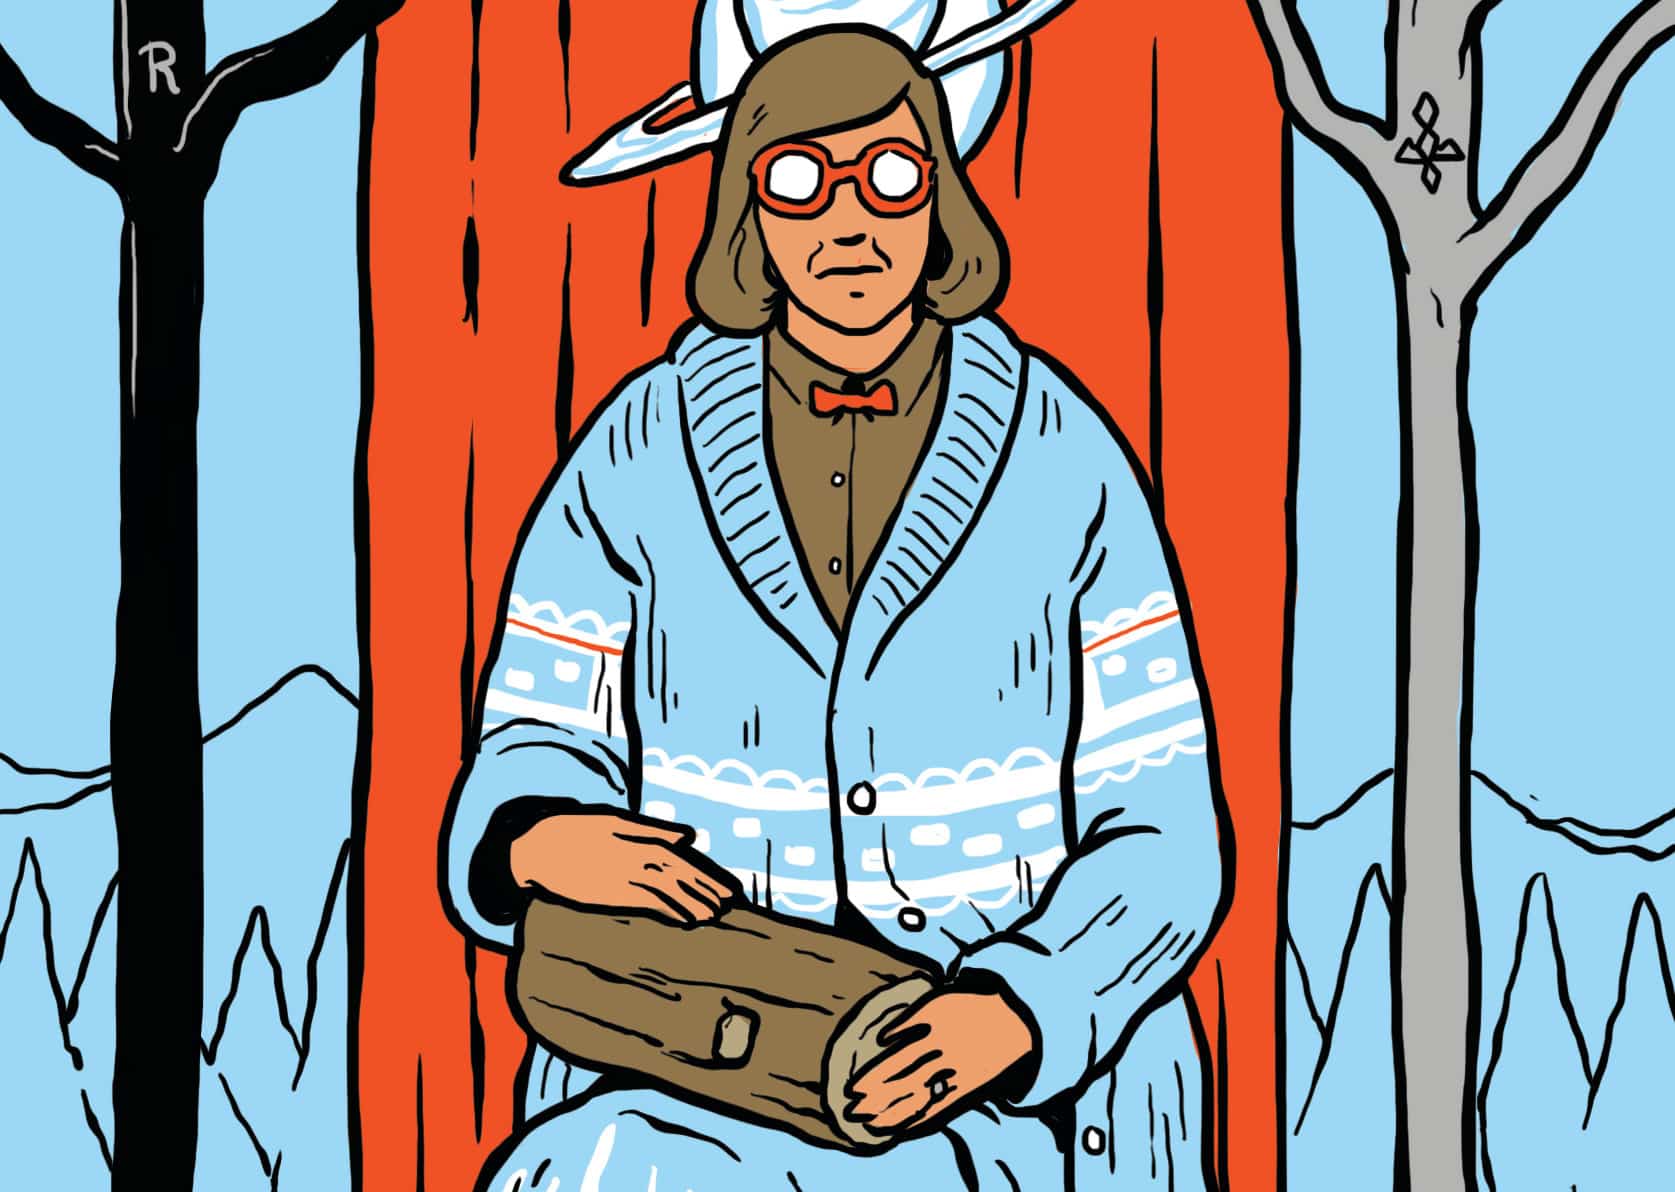 Cartas de tarot ilustradas de Twin Peaks por Benjamin Mackey